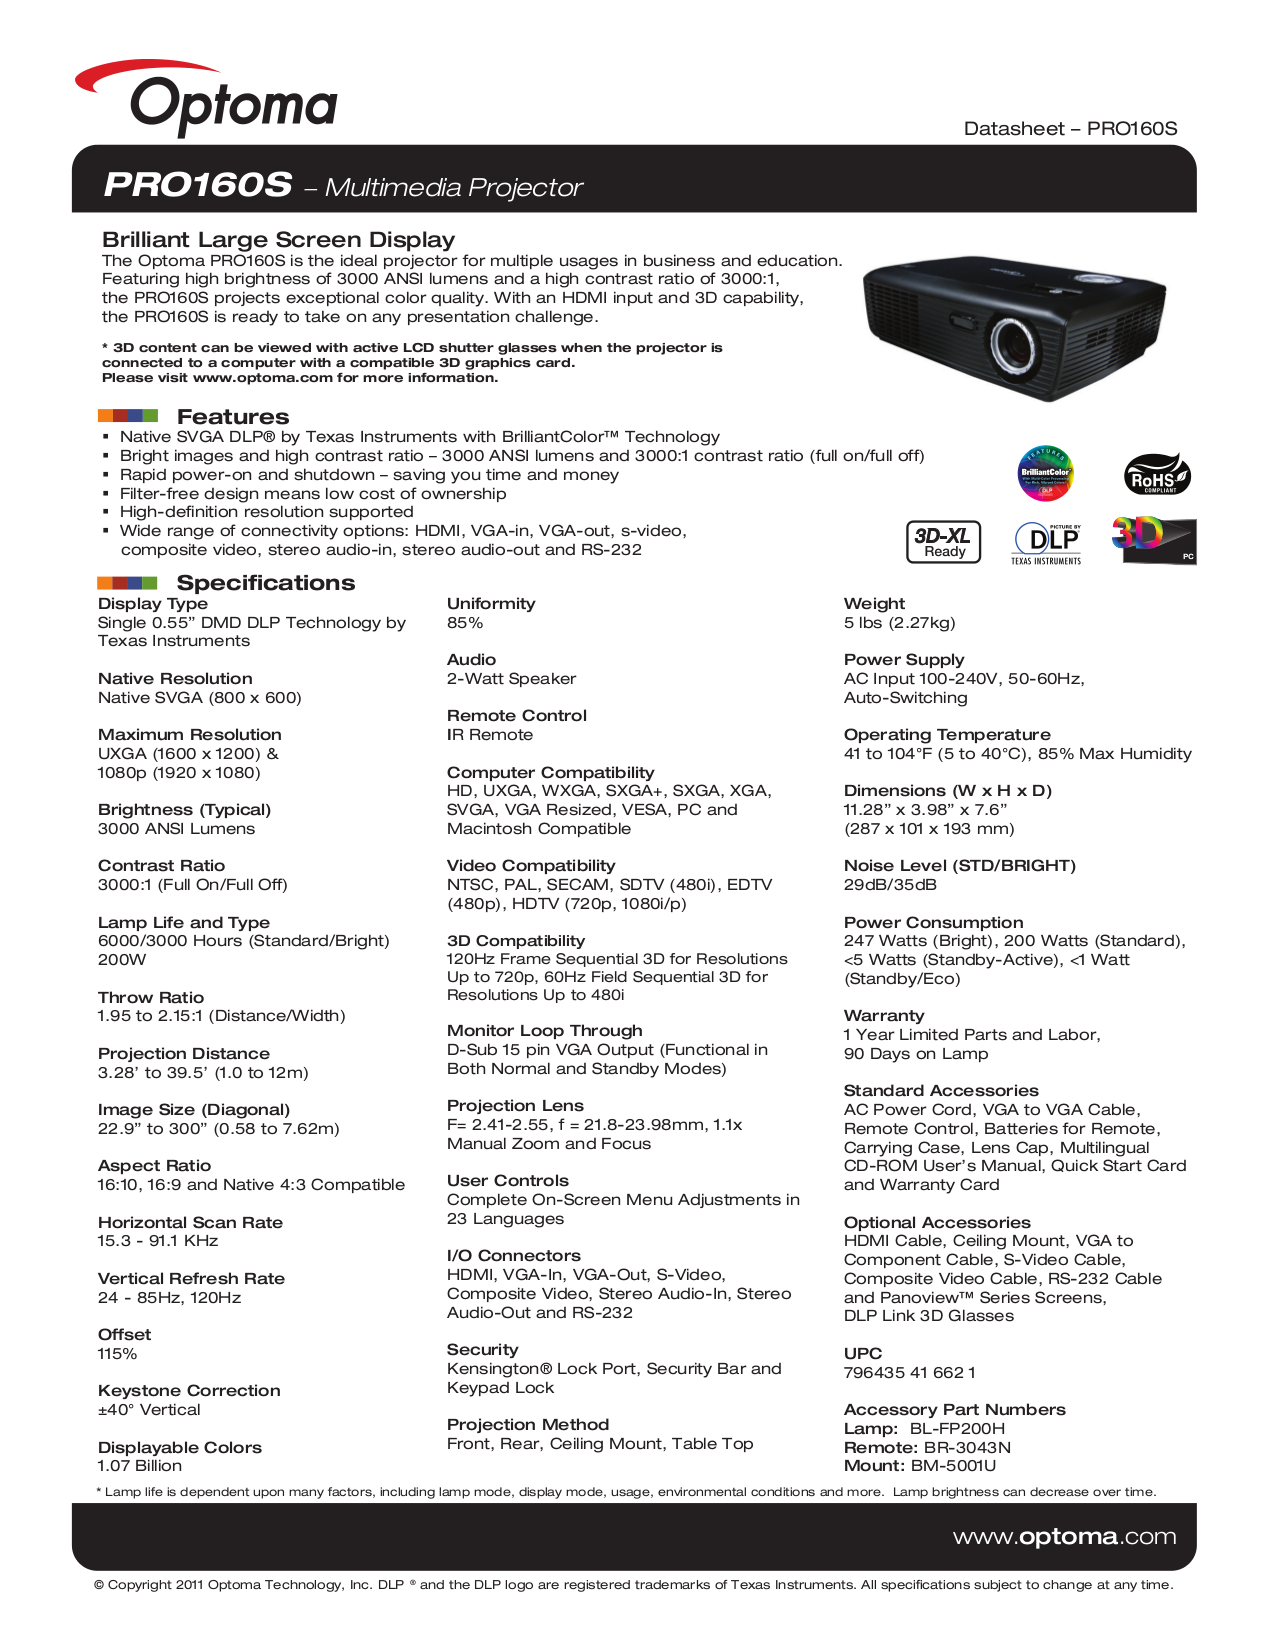 Optoma Projector Manual Download